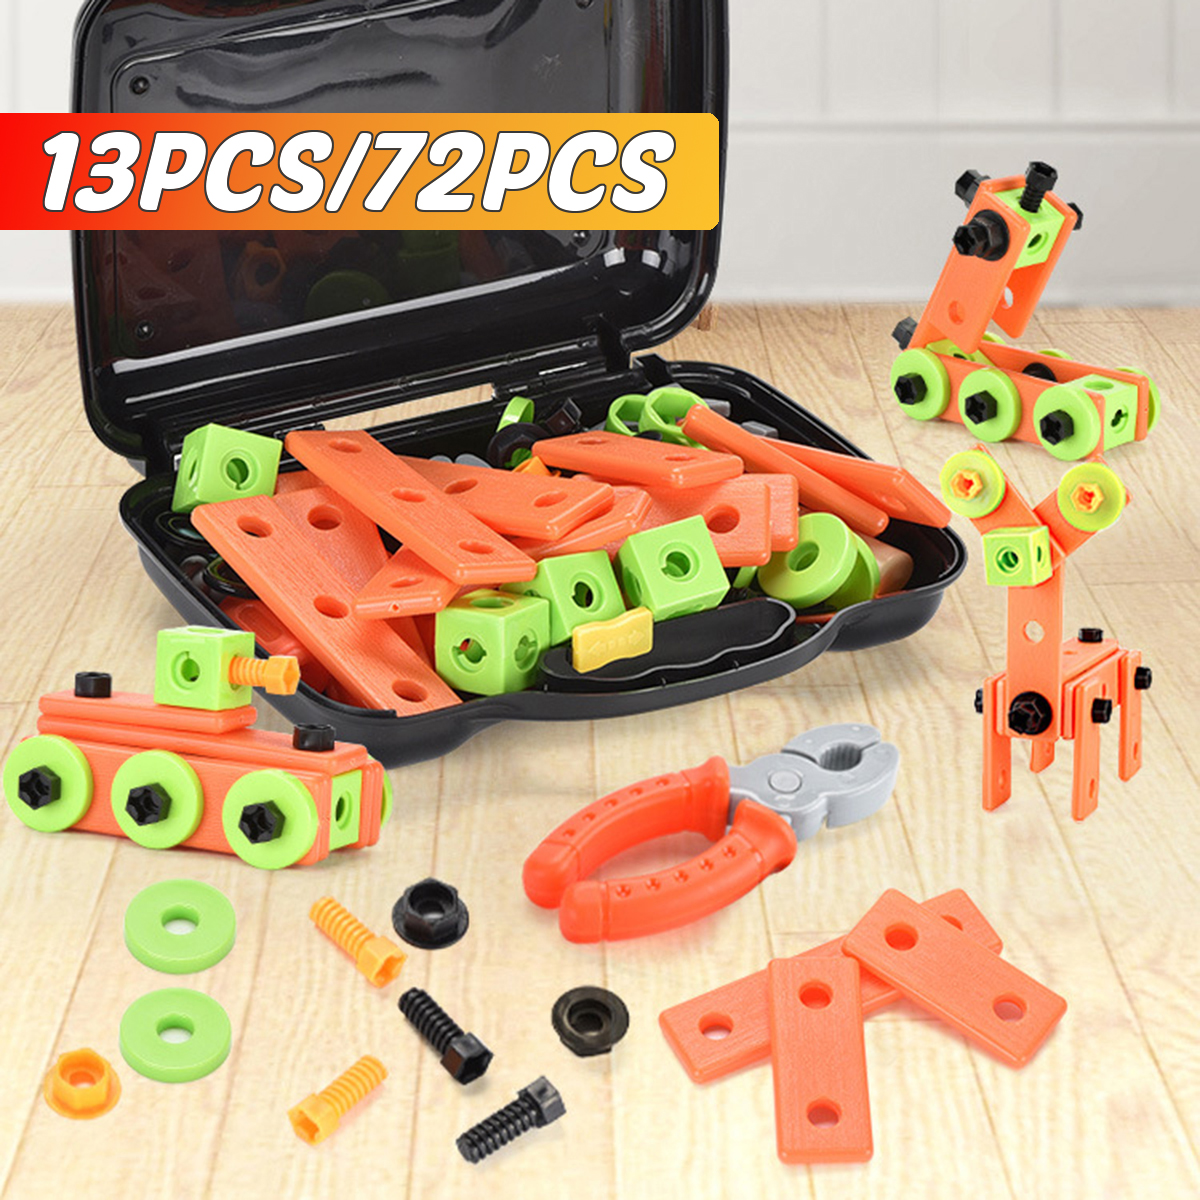 1372Pcs-3D-Puzzle-DIY-Asassembly-Screwing-Blocks-Repair-Tool-Kit-Educational-Toy-for-Kids-Gift-1735098-2